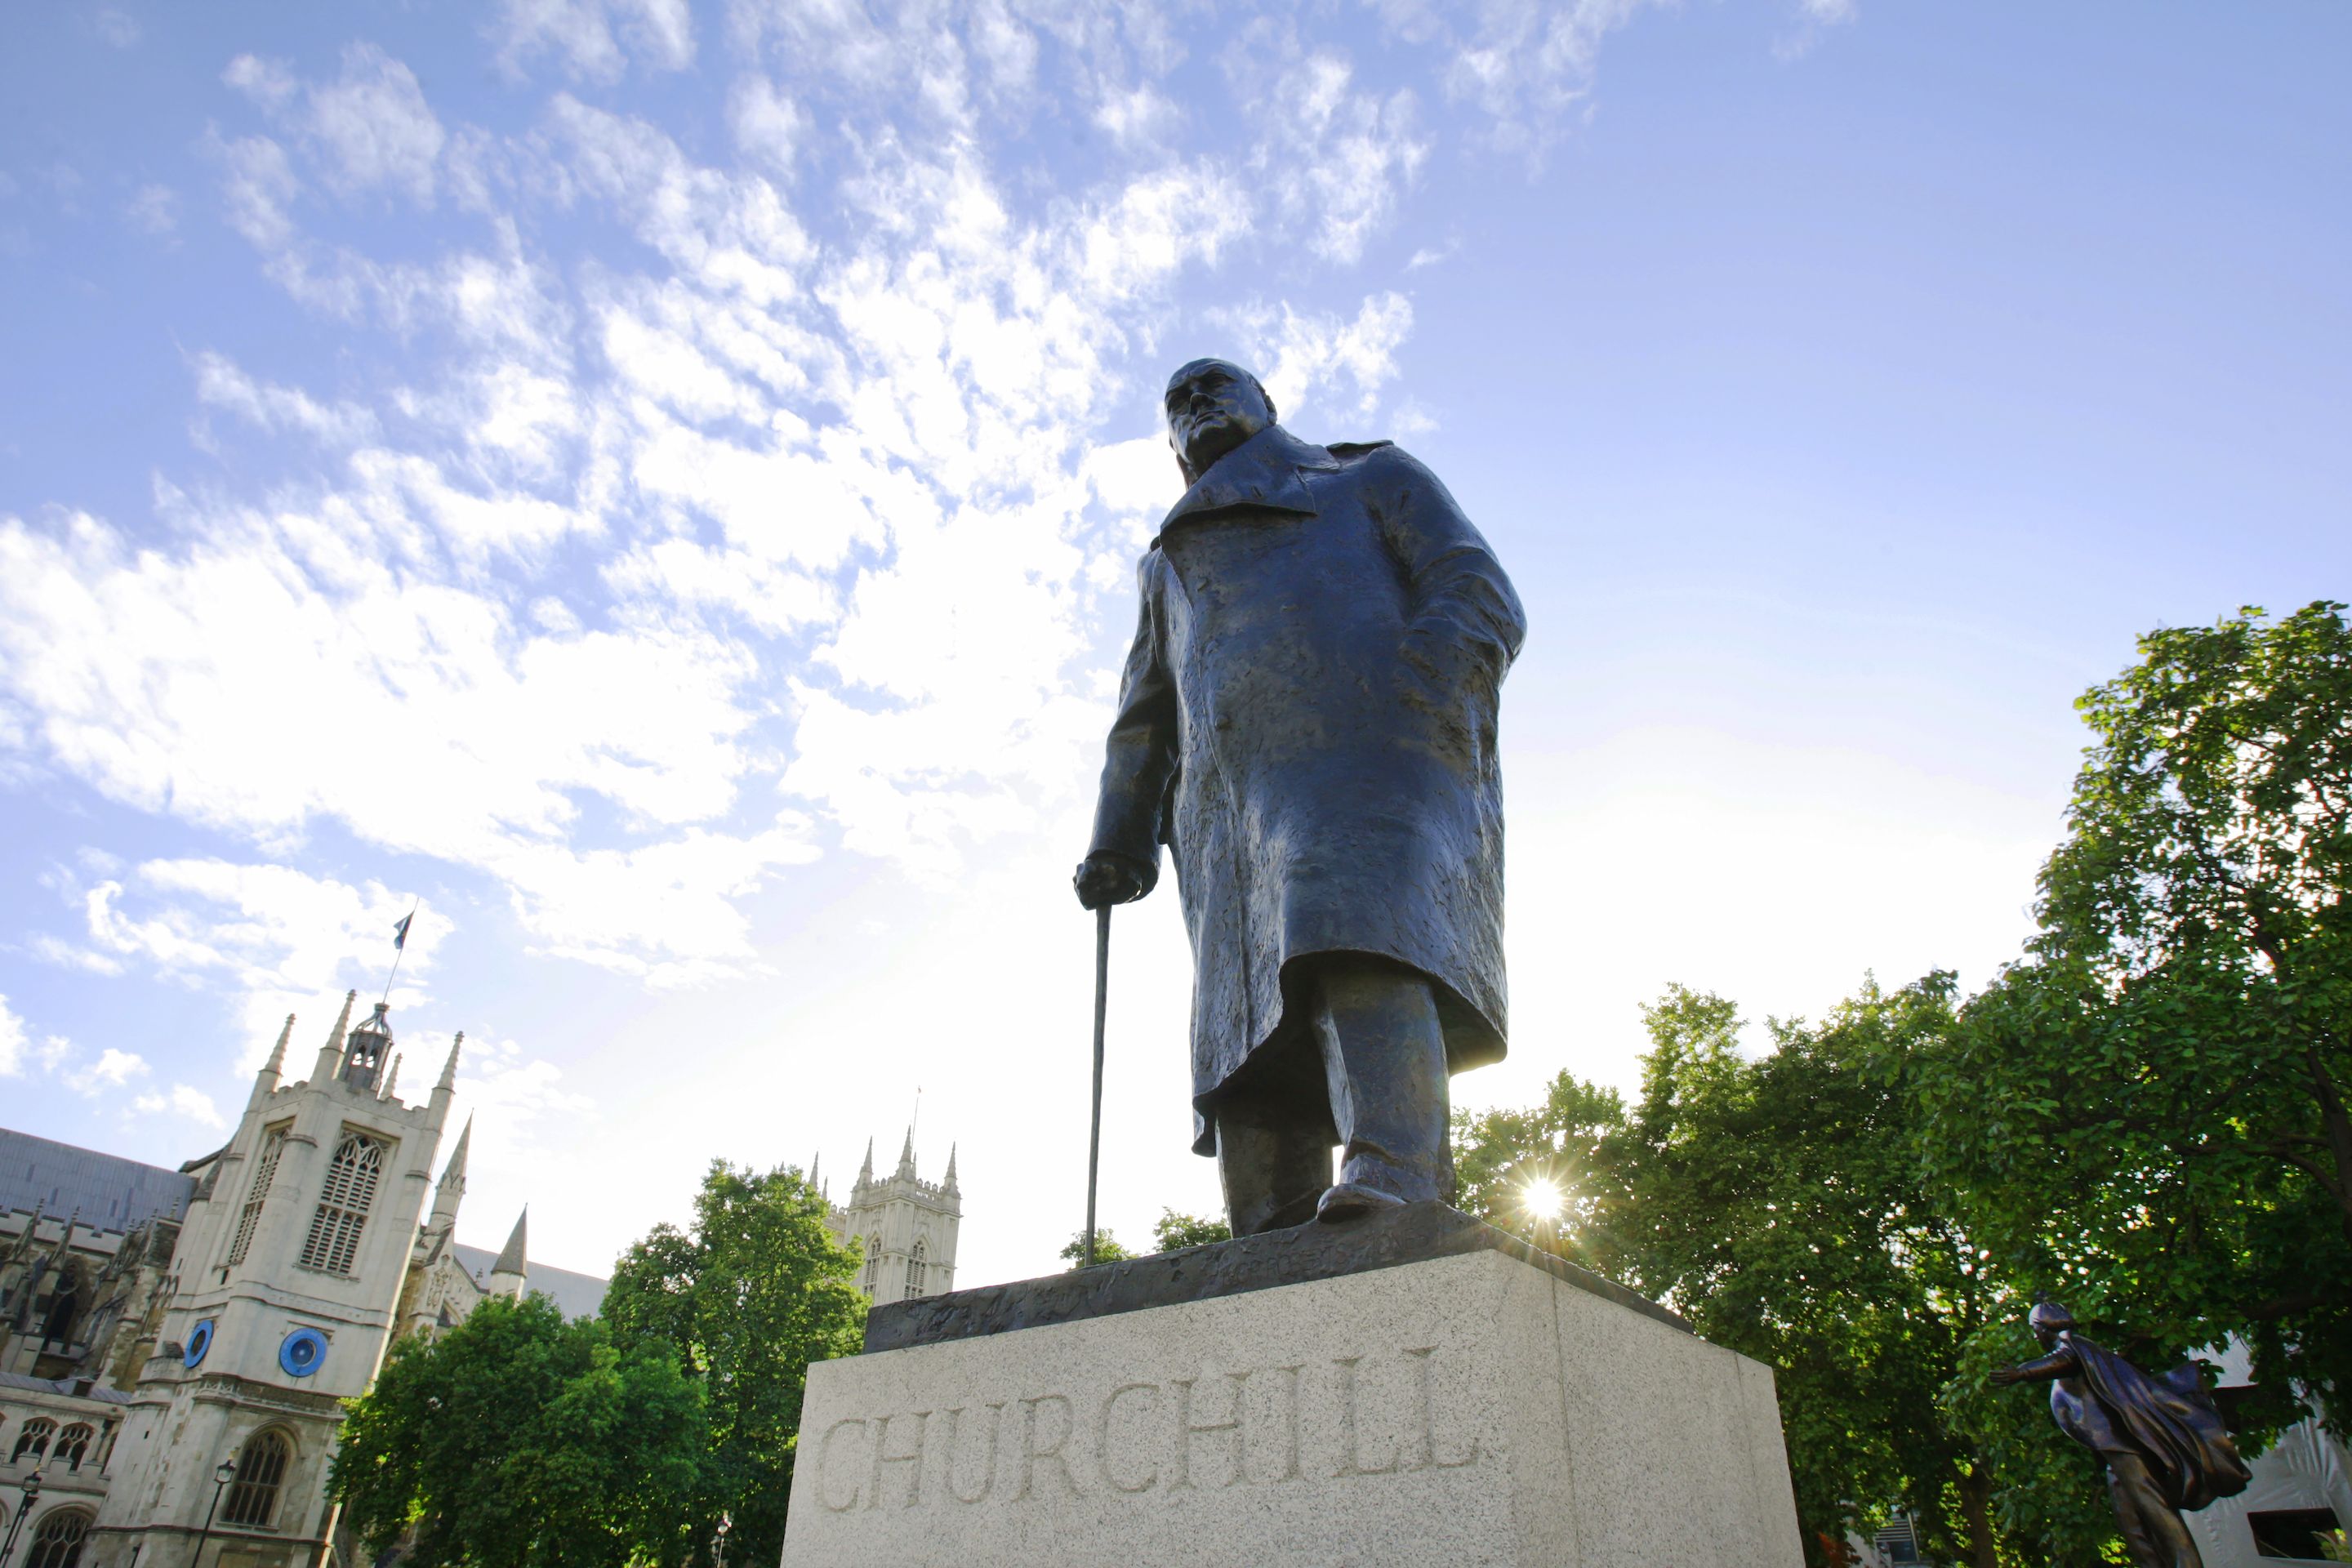 Winston Churchill statue in London, UK